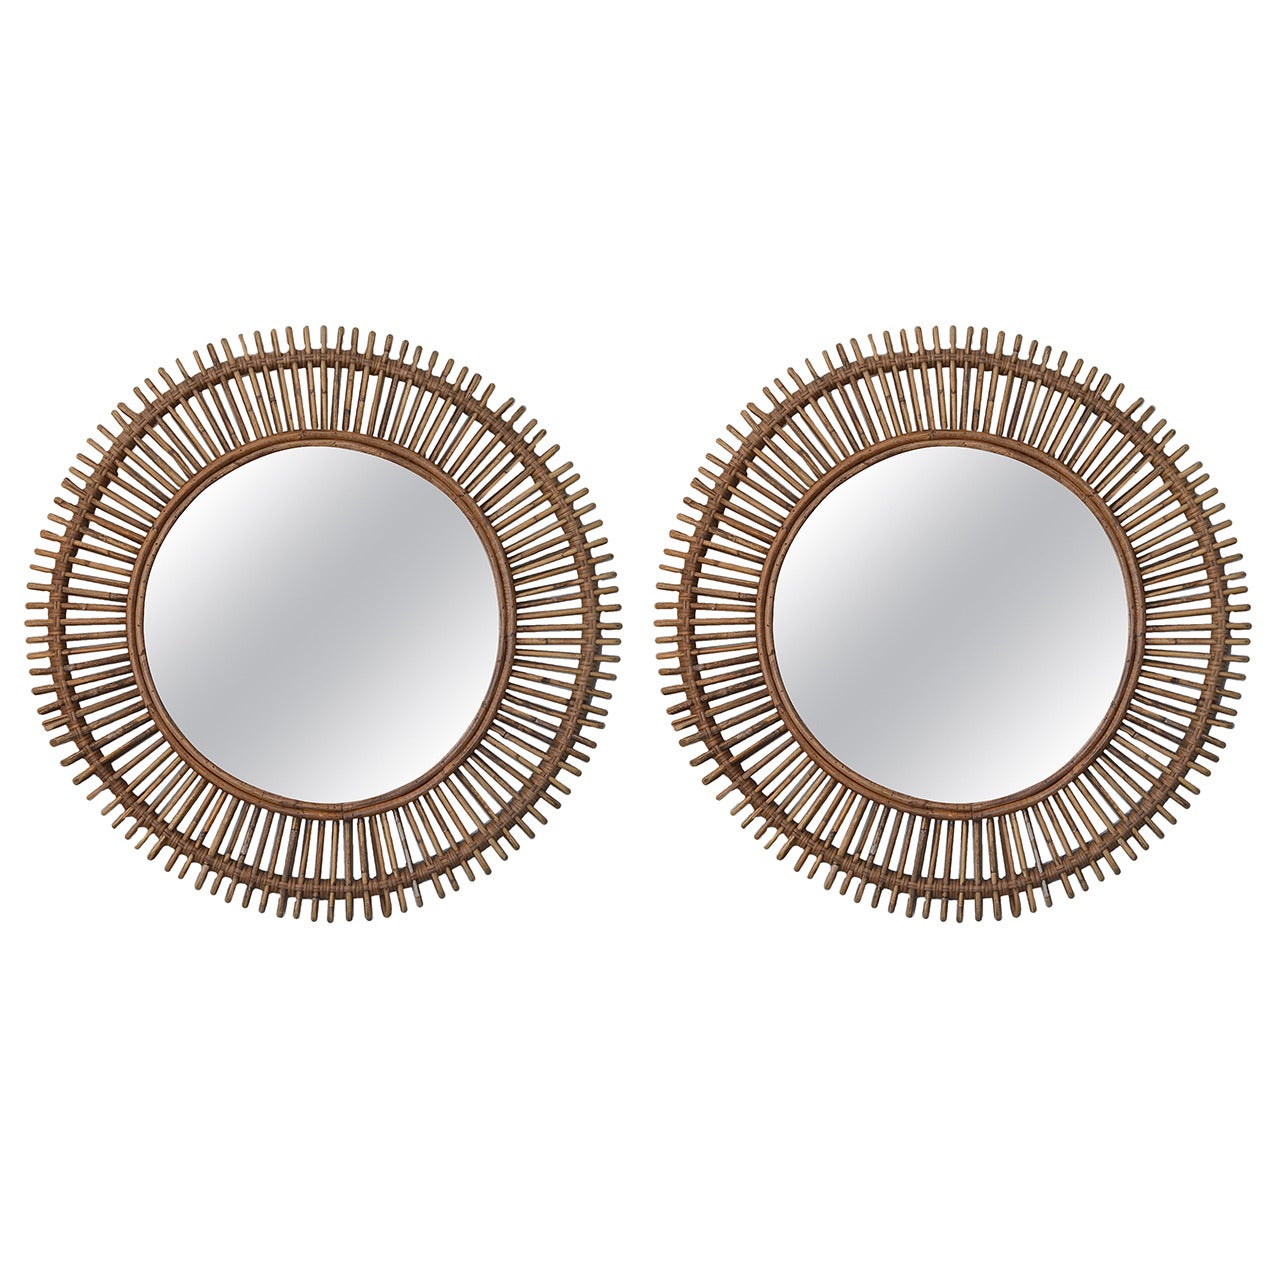 Pair of Large Decorative Convex Rattan Mirrors